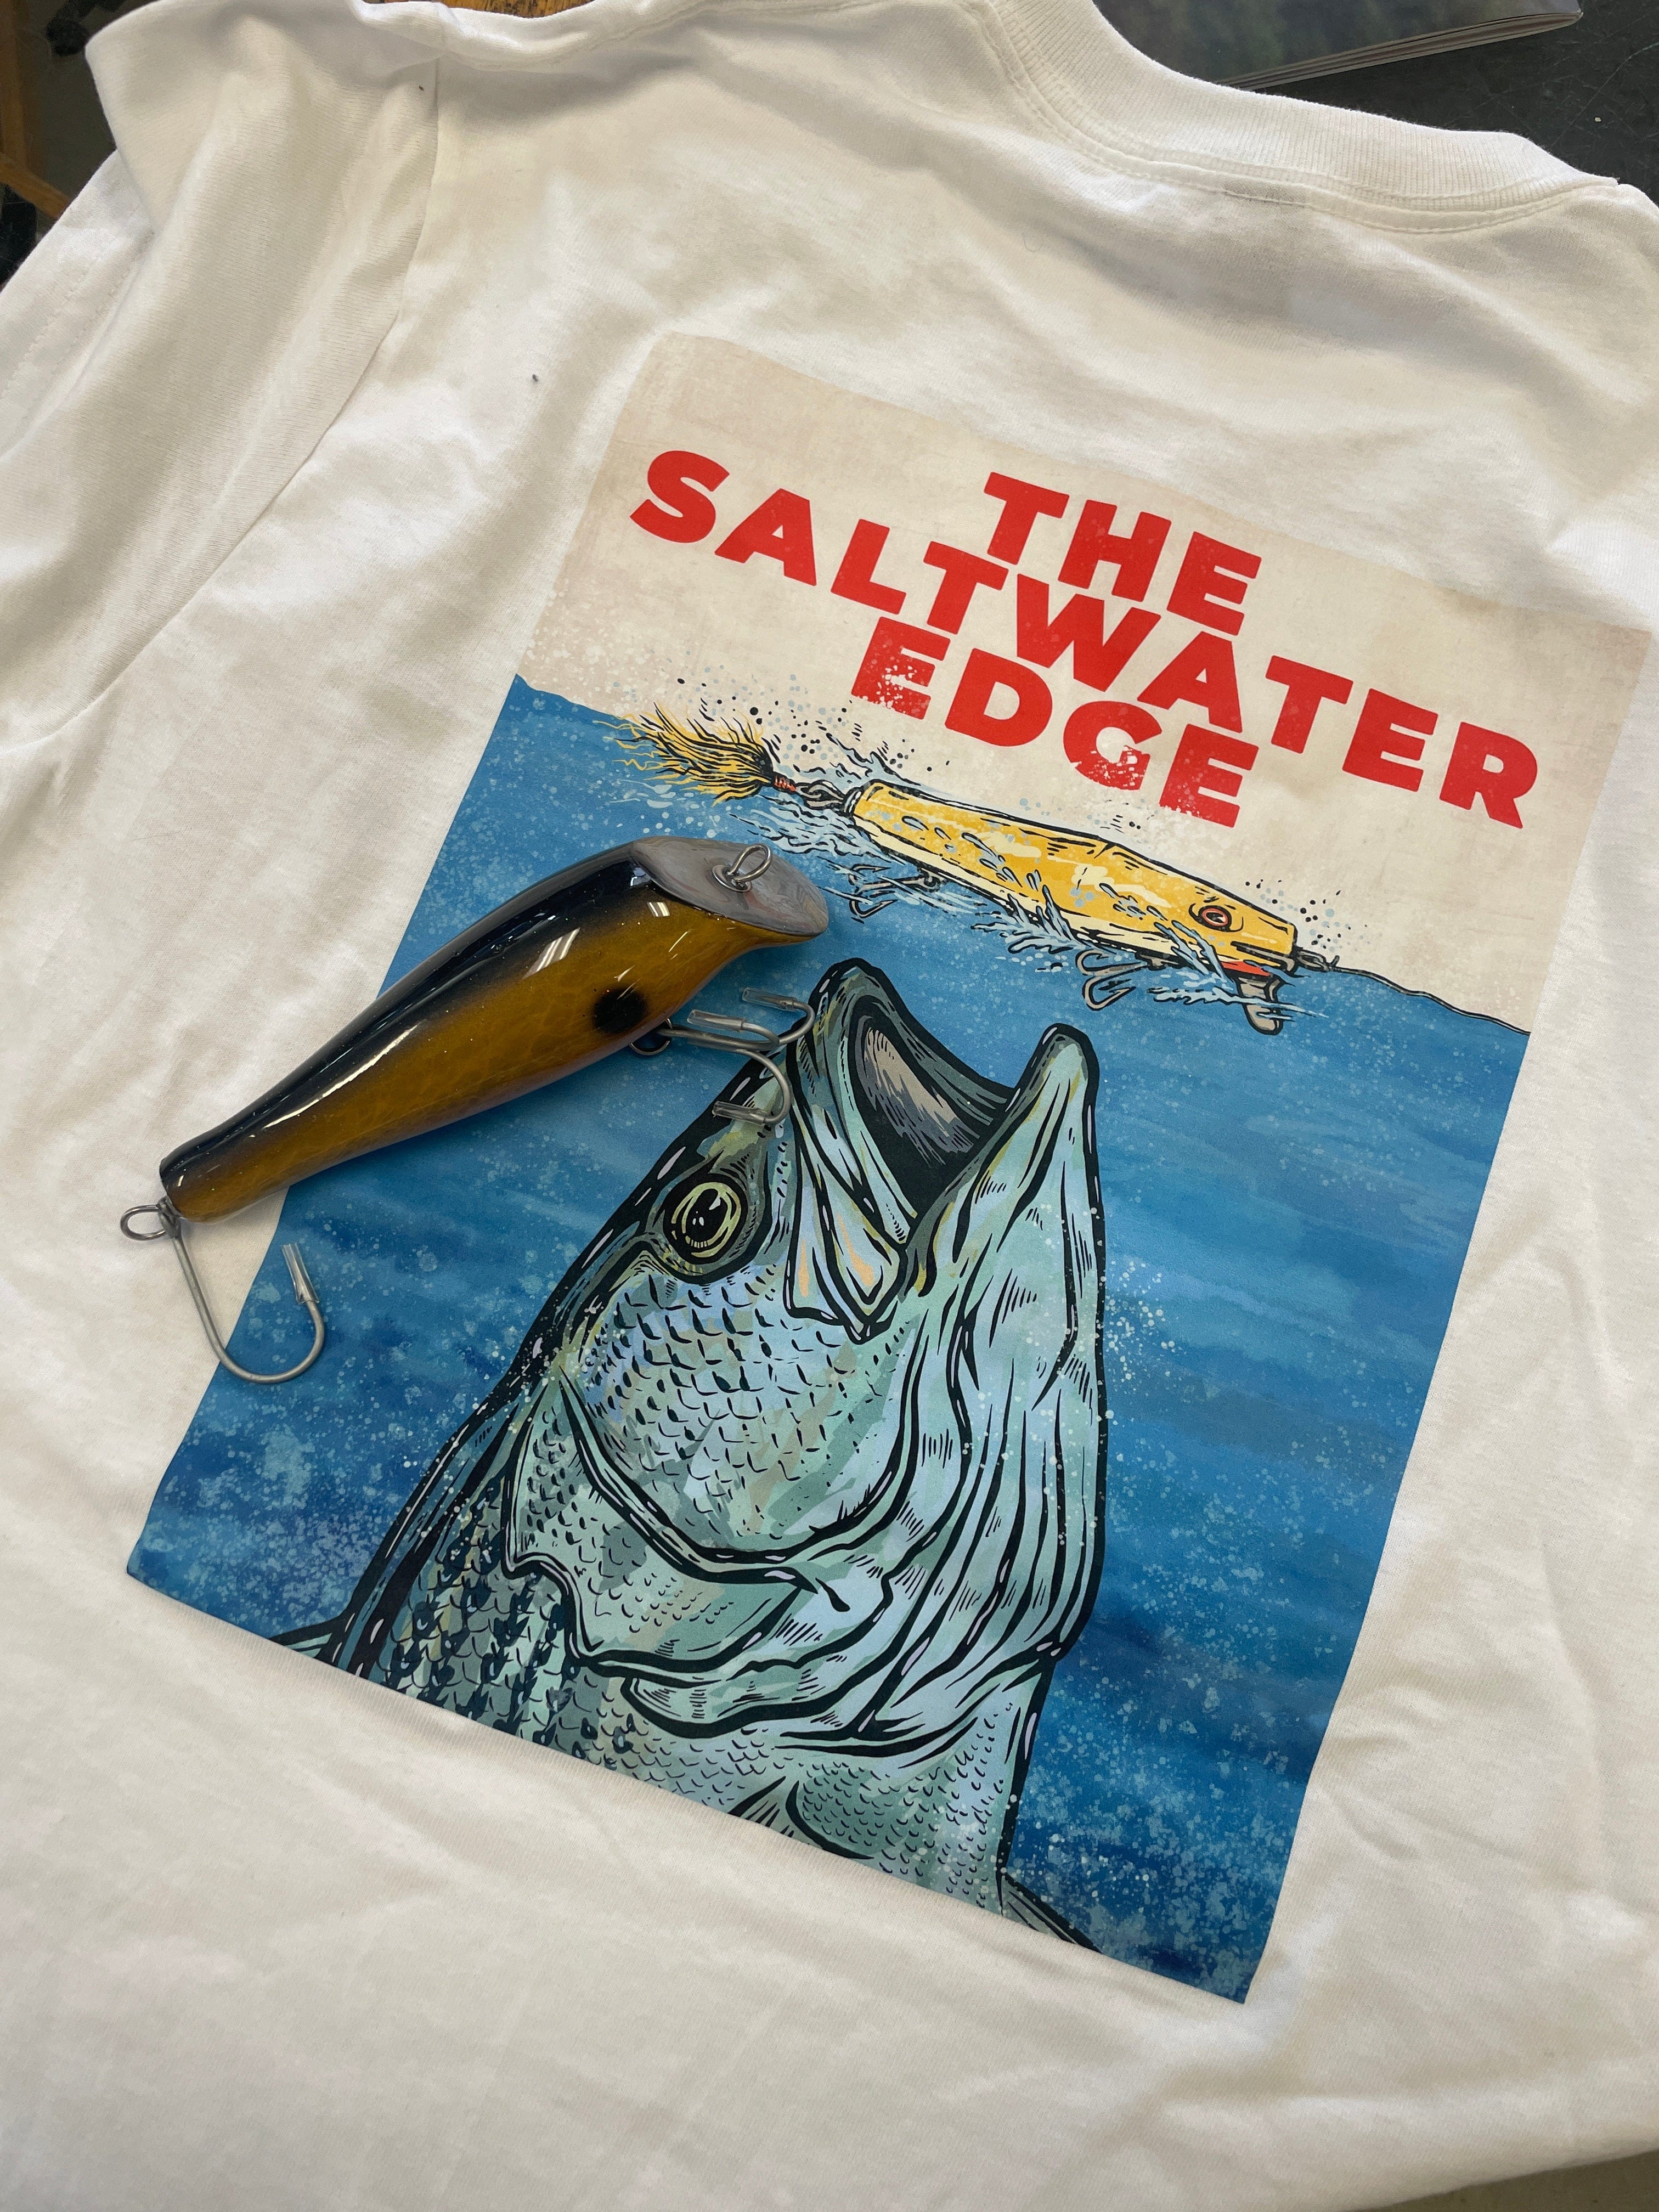 On Sale Reels - The Saltwater Edge